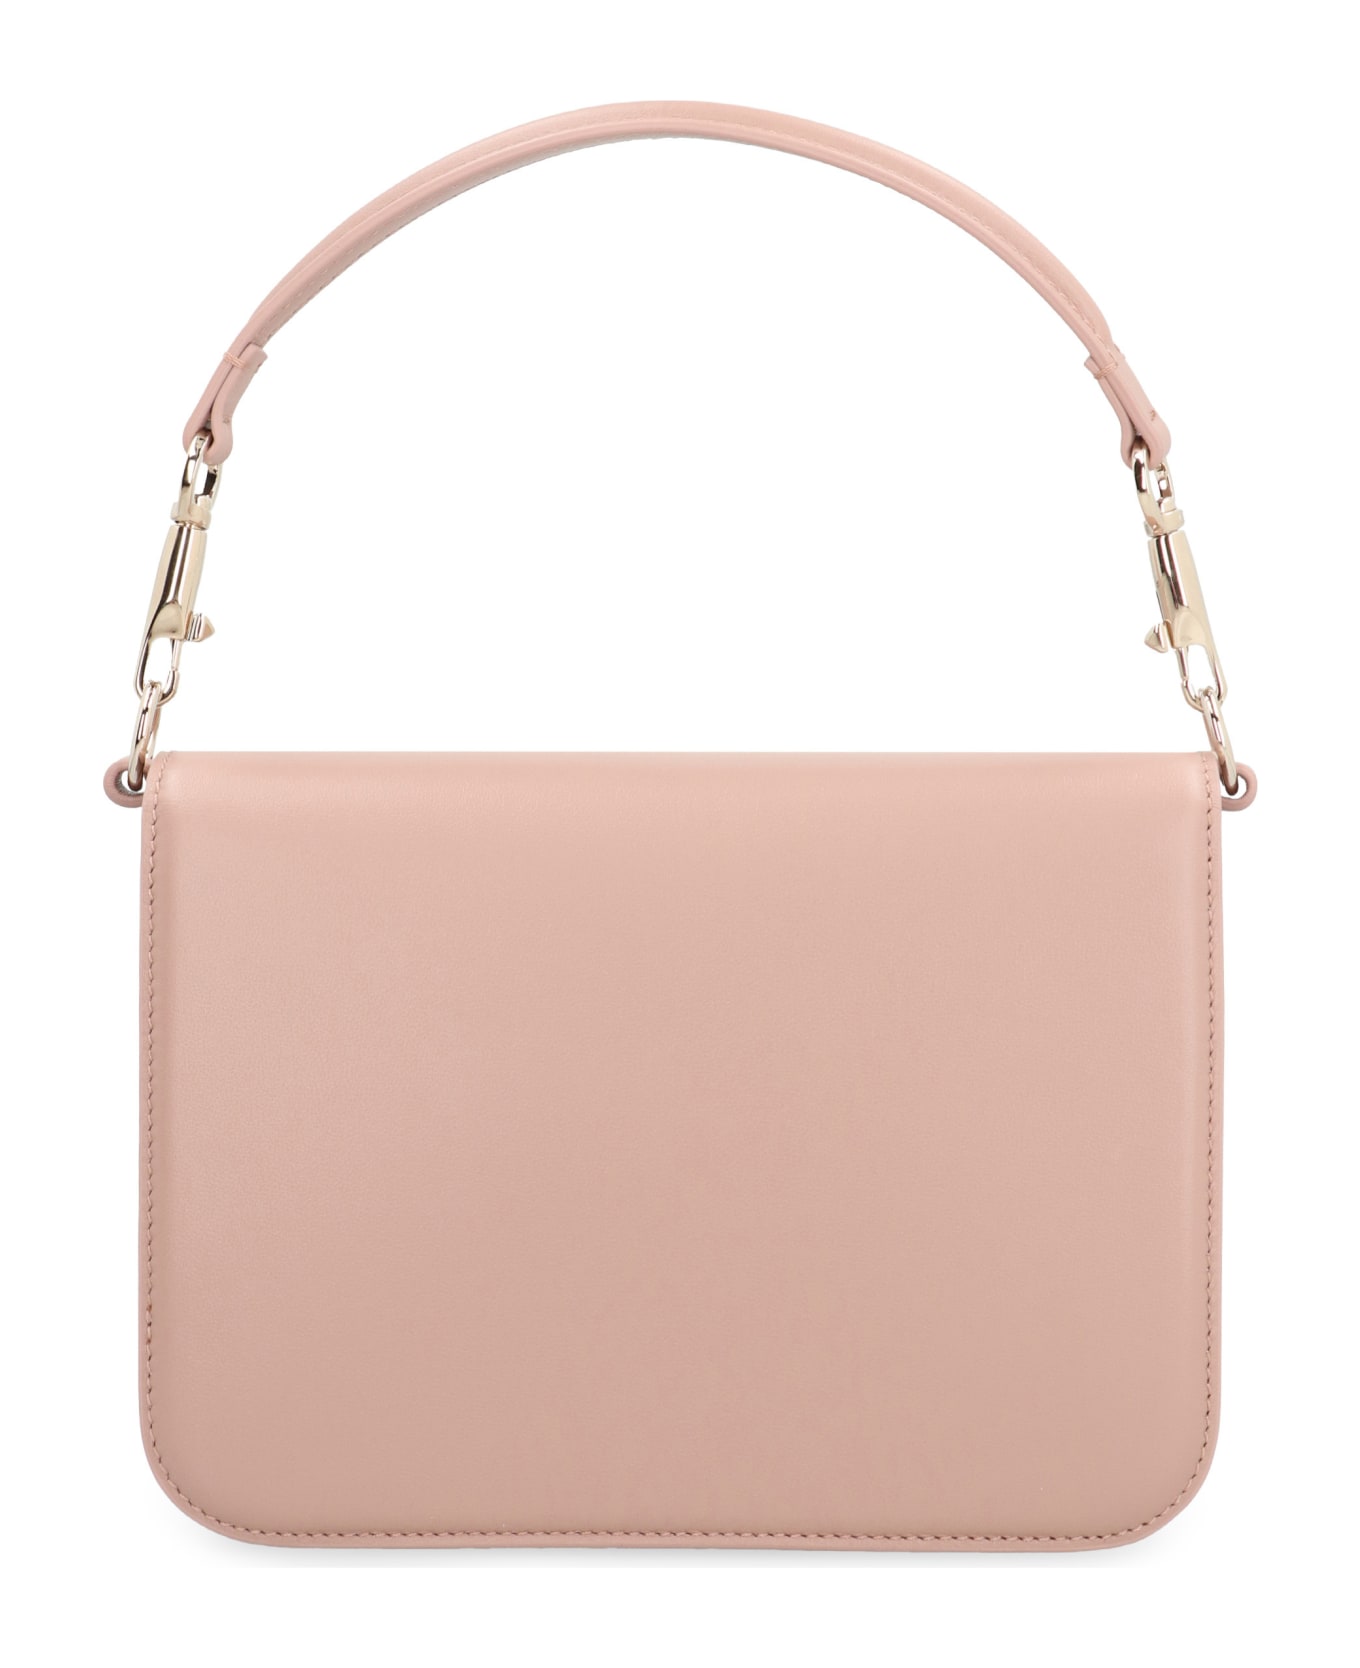 Valentino Garavani - Locò Leather Shoulder Bag - Pink